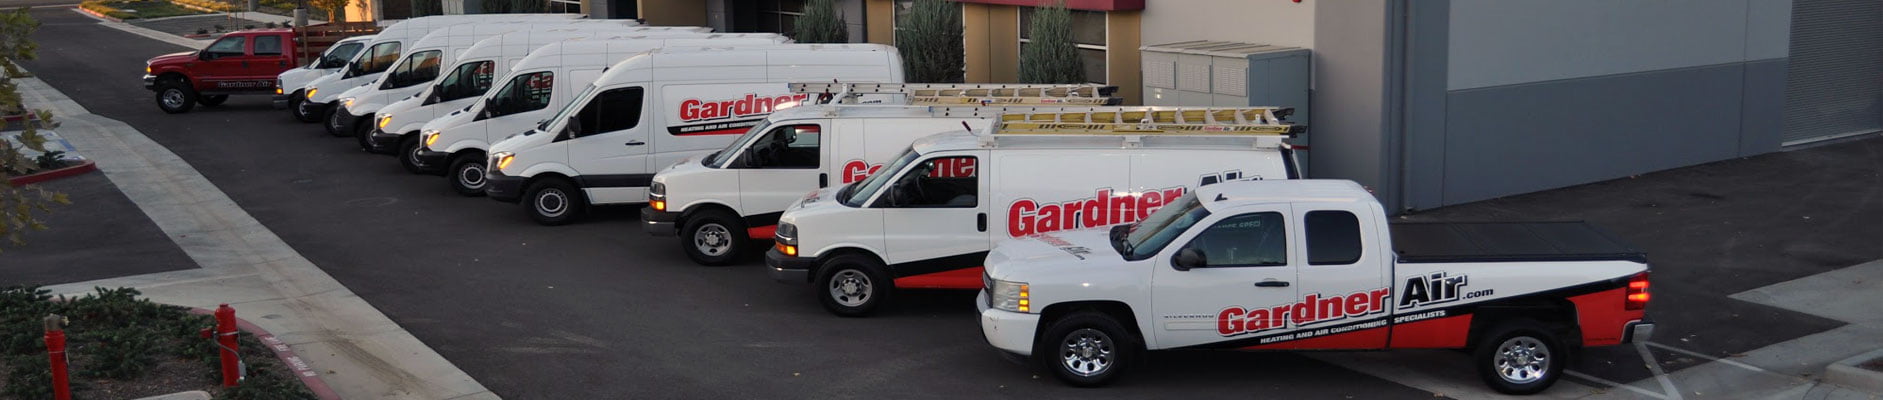 Gardner Air Trucks